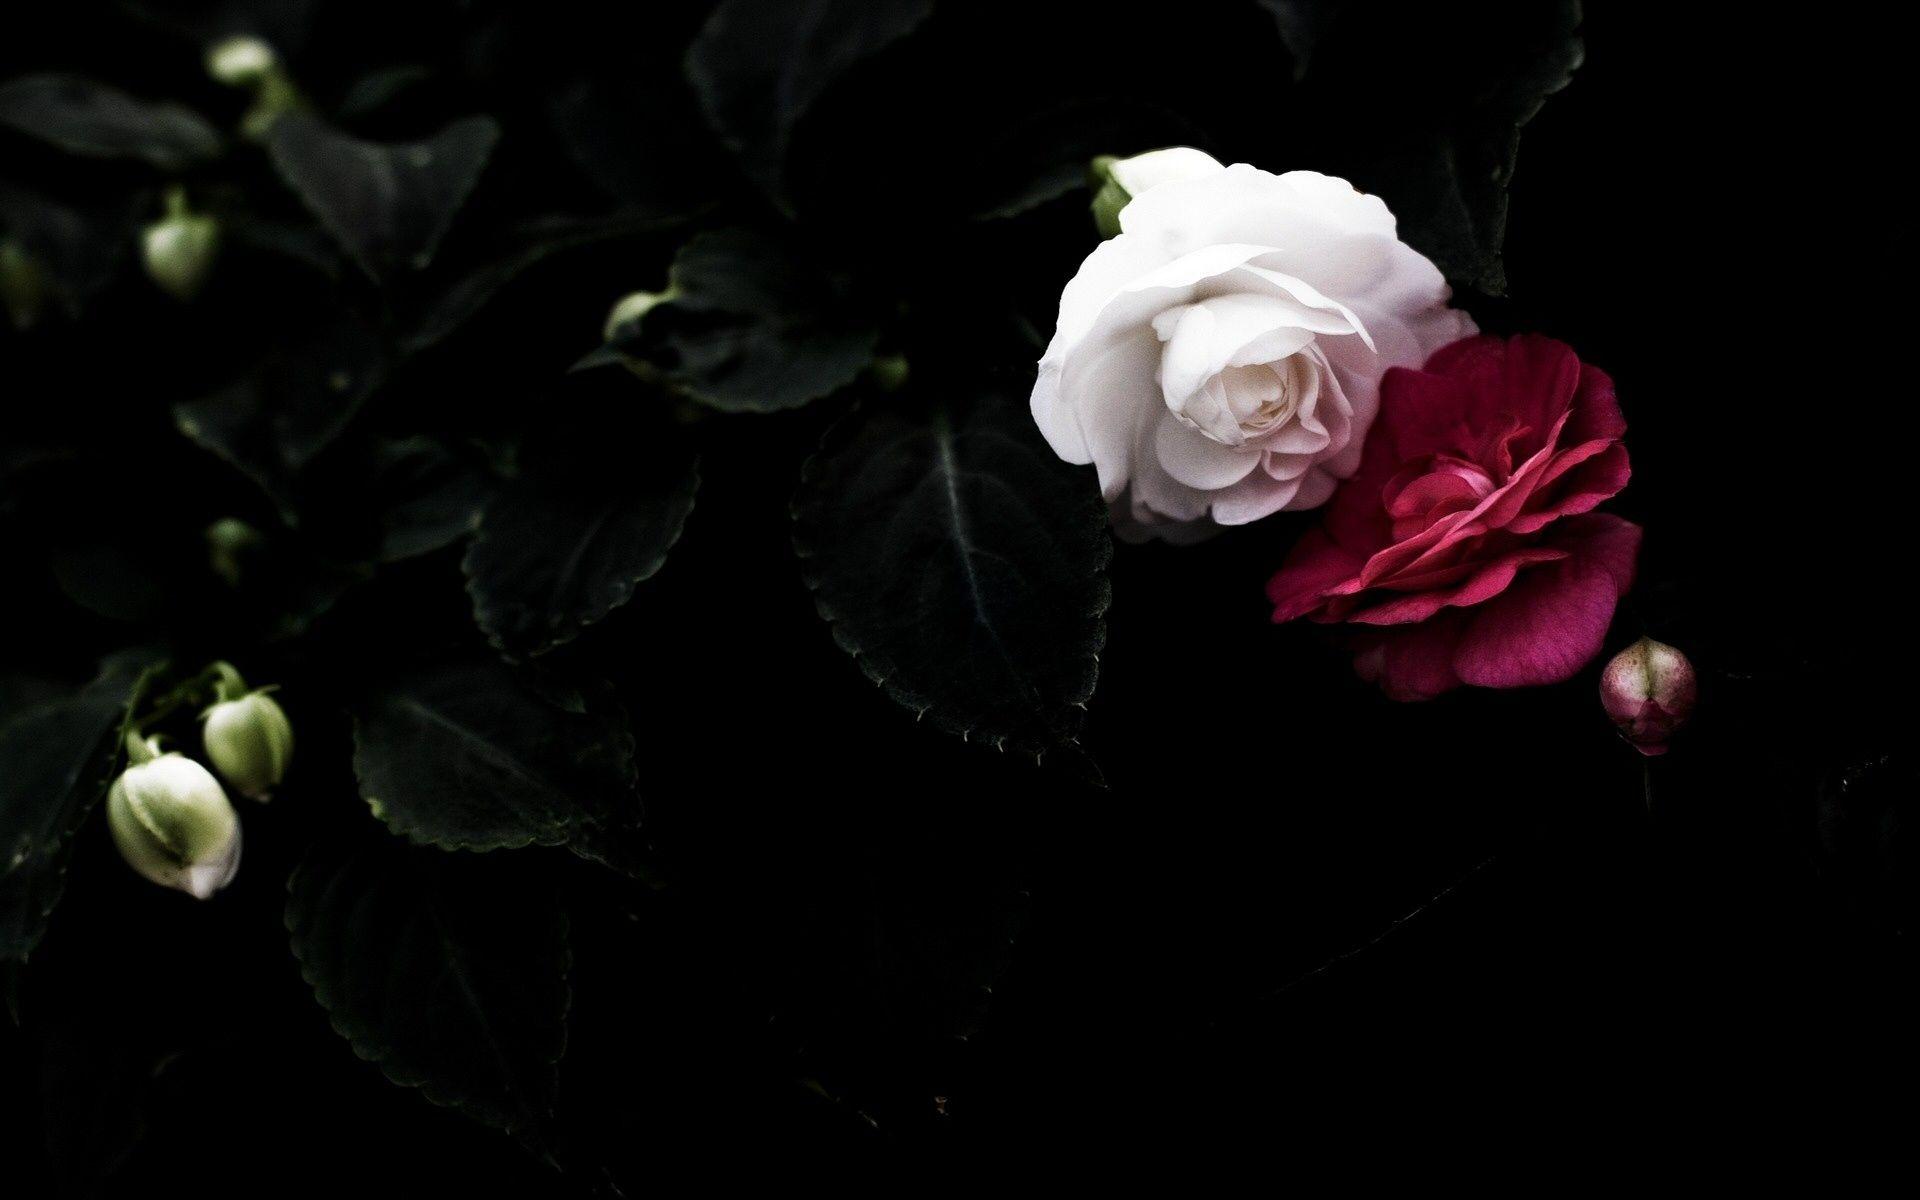 dongetrabi: Black And White Red Rose Wallpaper Image